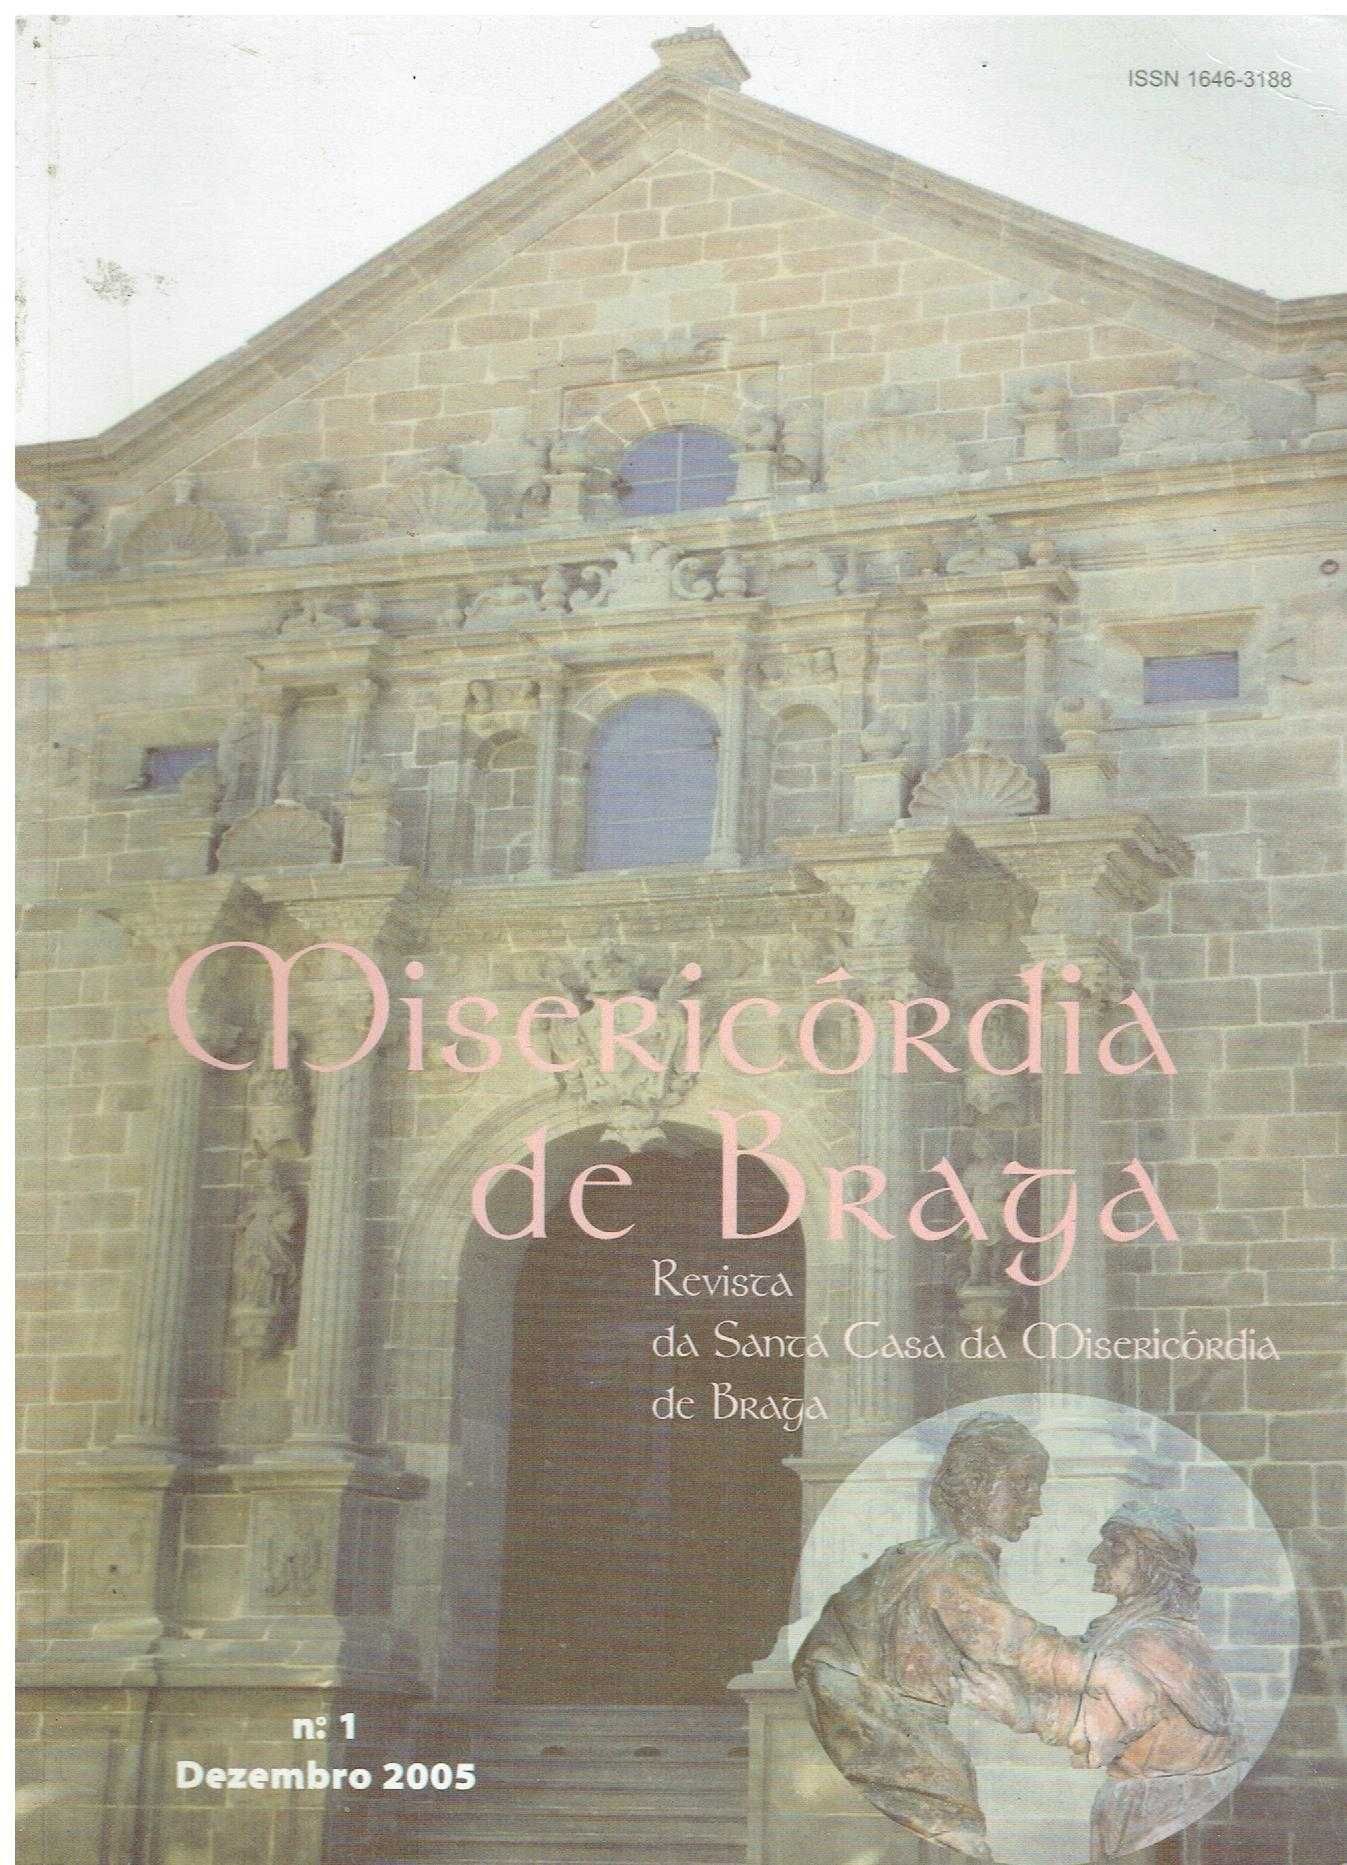 878

Misericórdia de Braga : revista